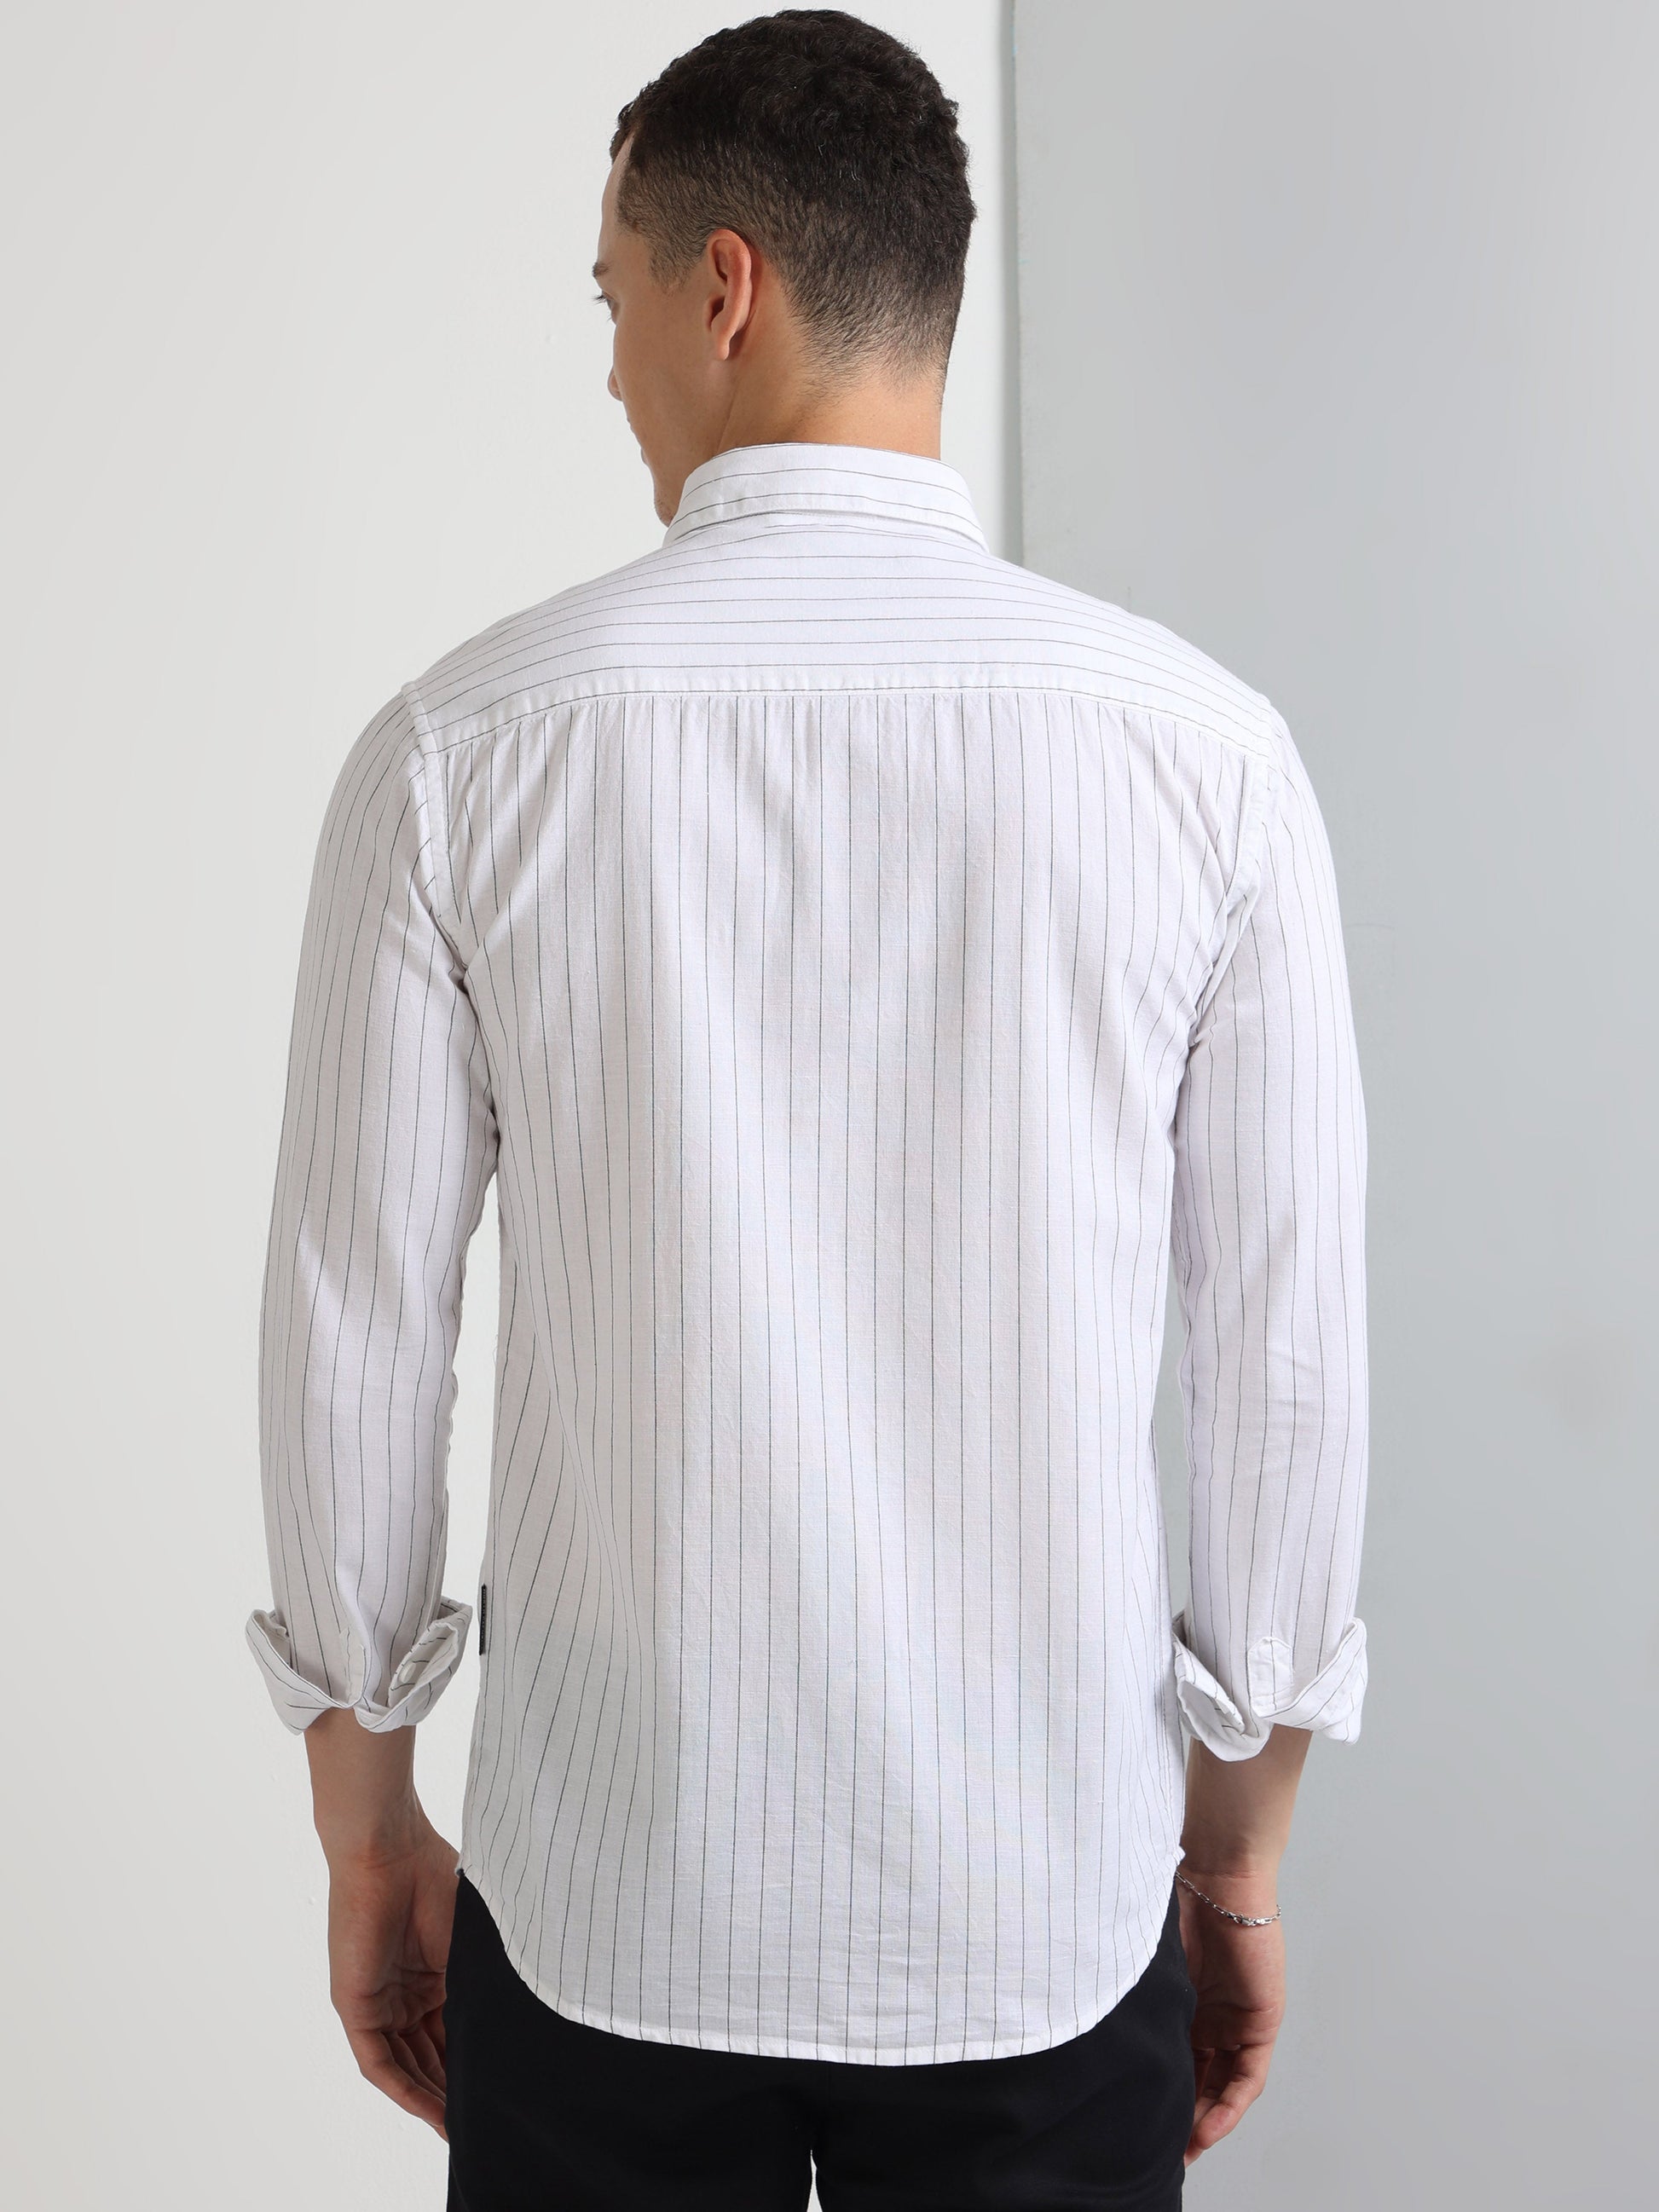 white zipper pocket cotton men's striped shirt